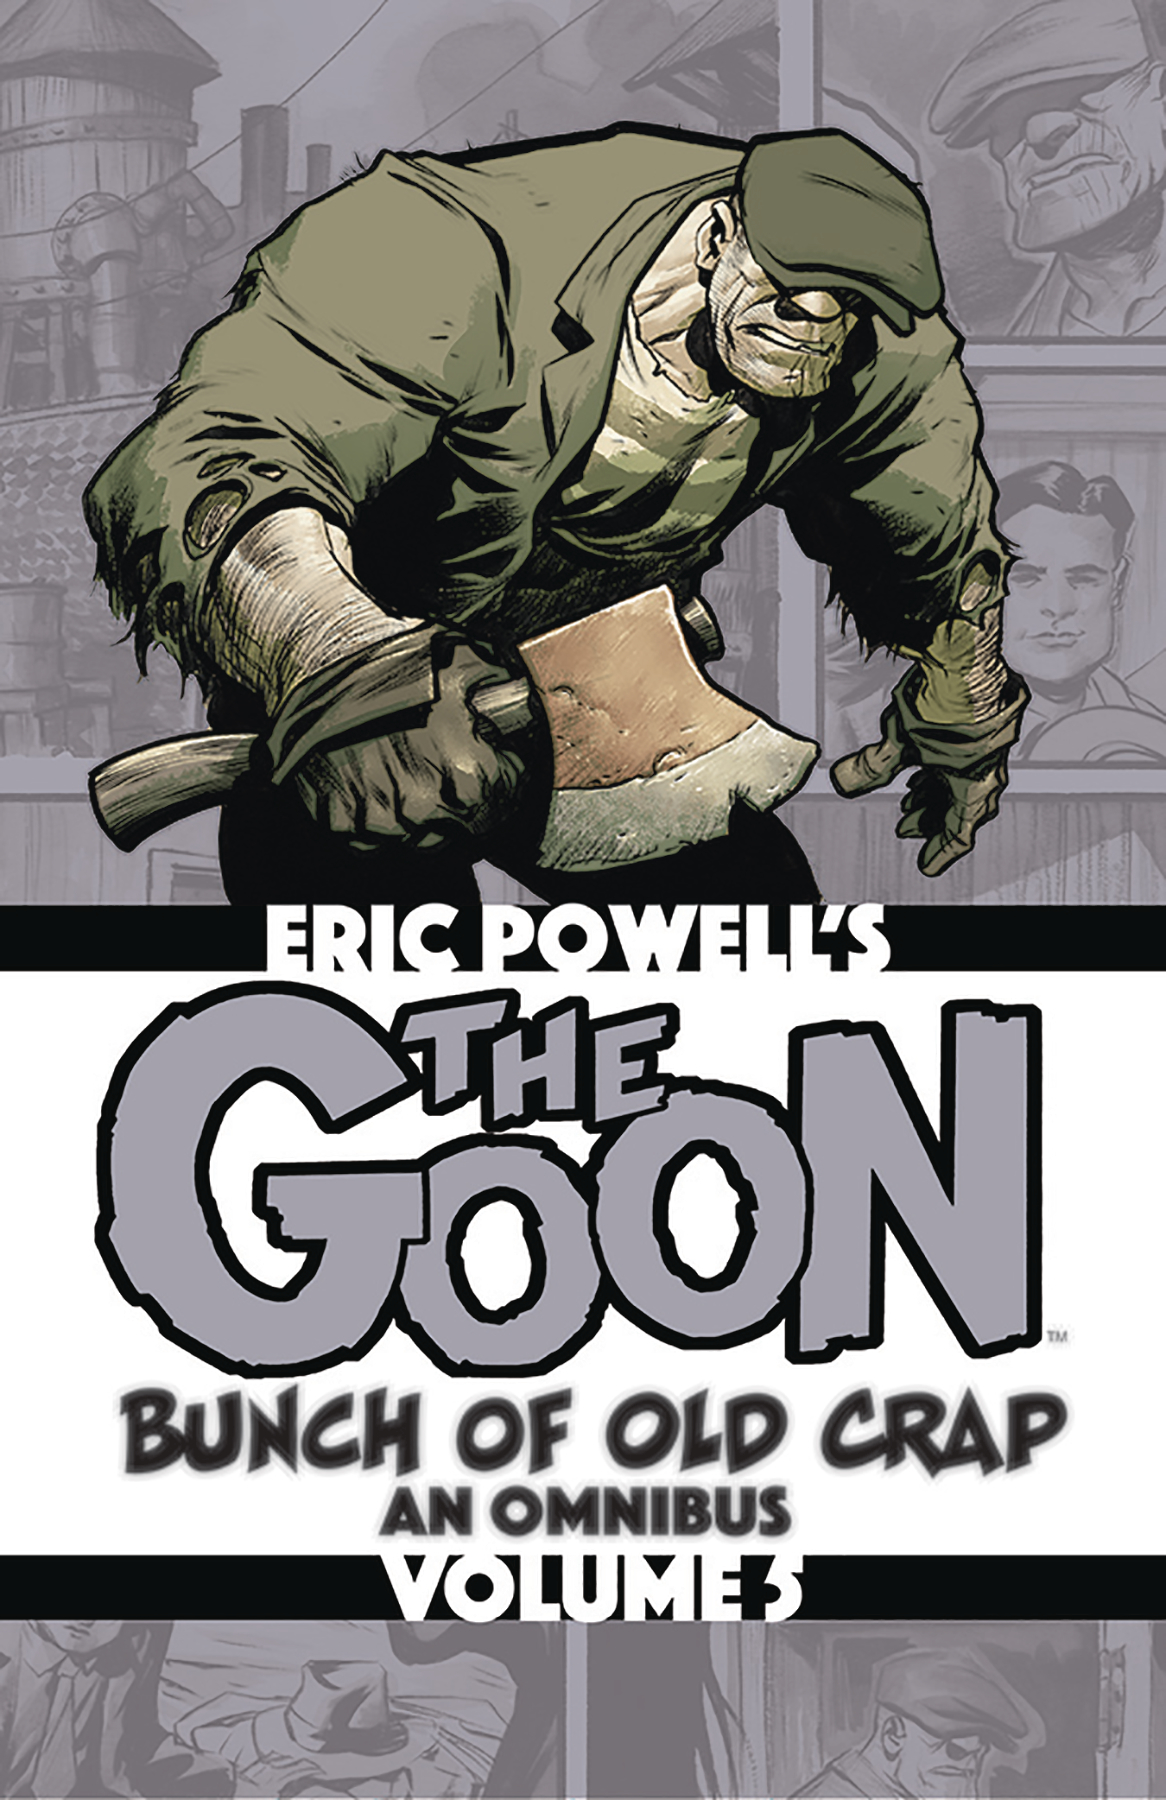 Goon Bunch of Old Crap Graphic Novel Volume 5